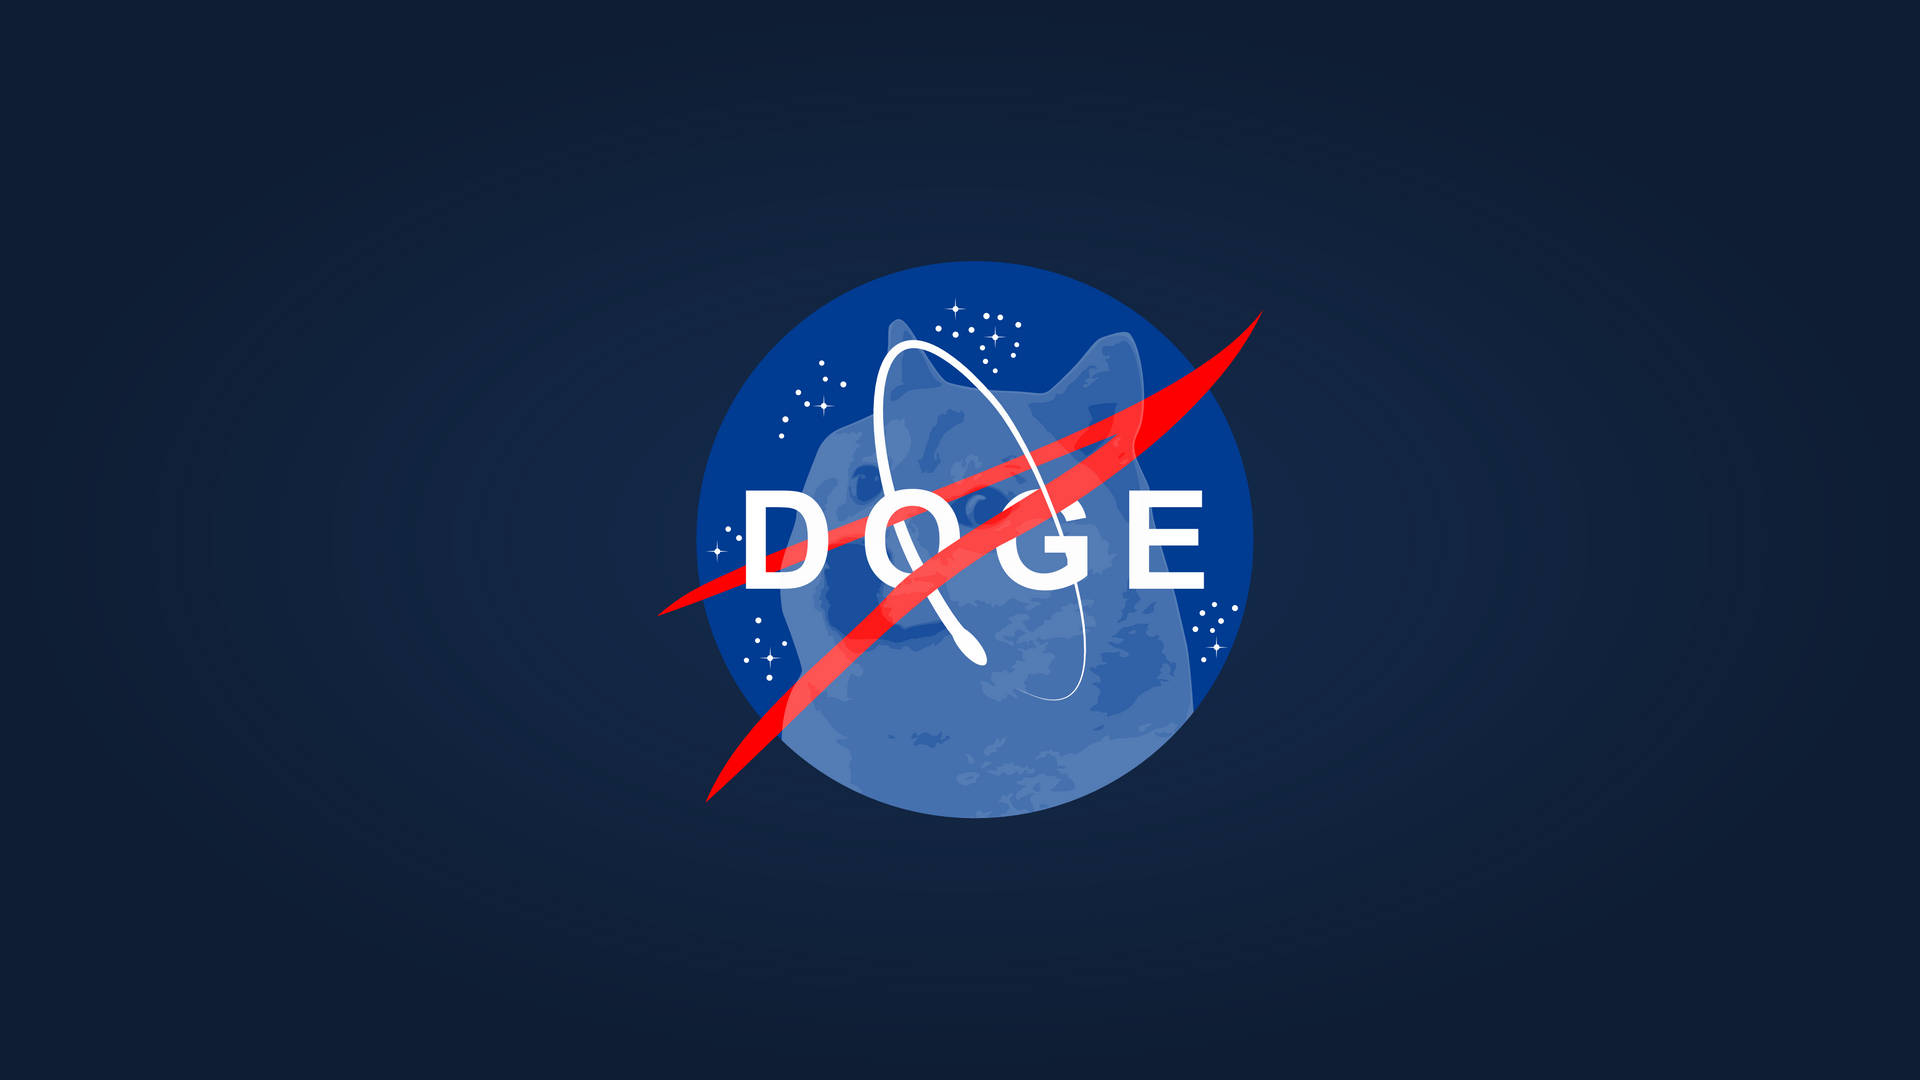 NASA embraces the power of Doge meme Wallpaper